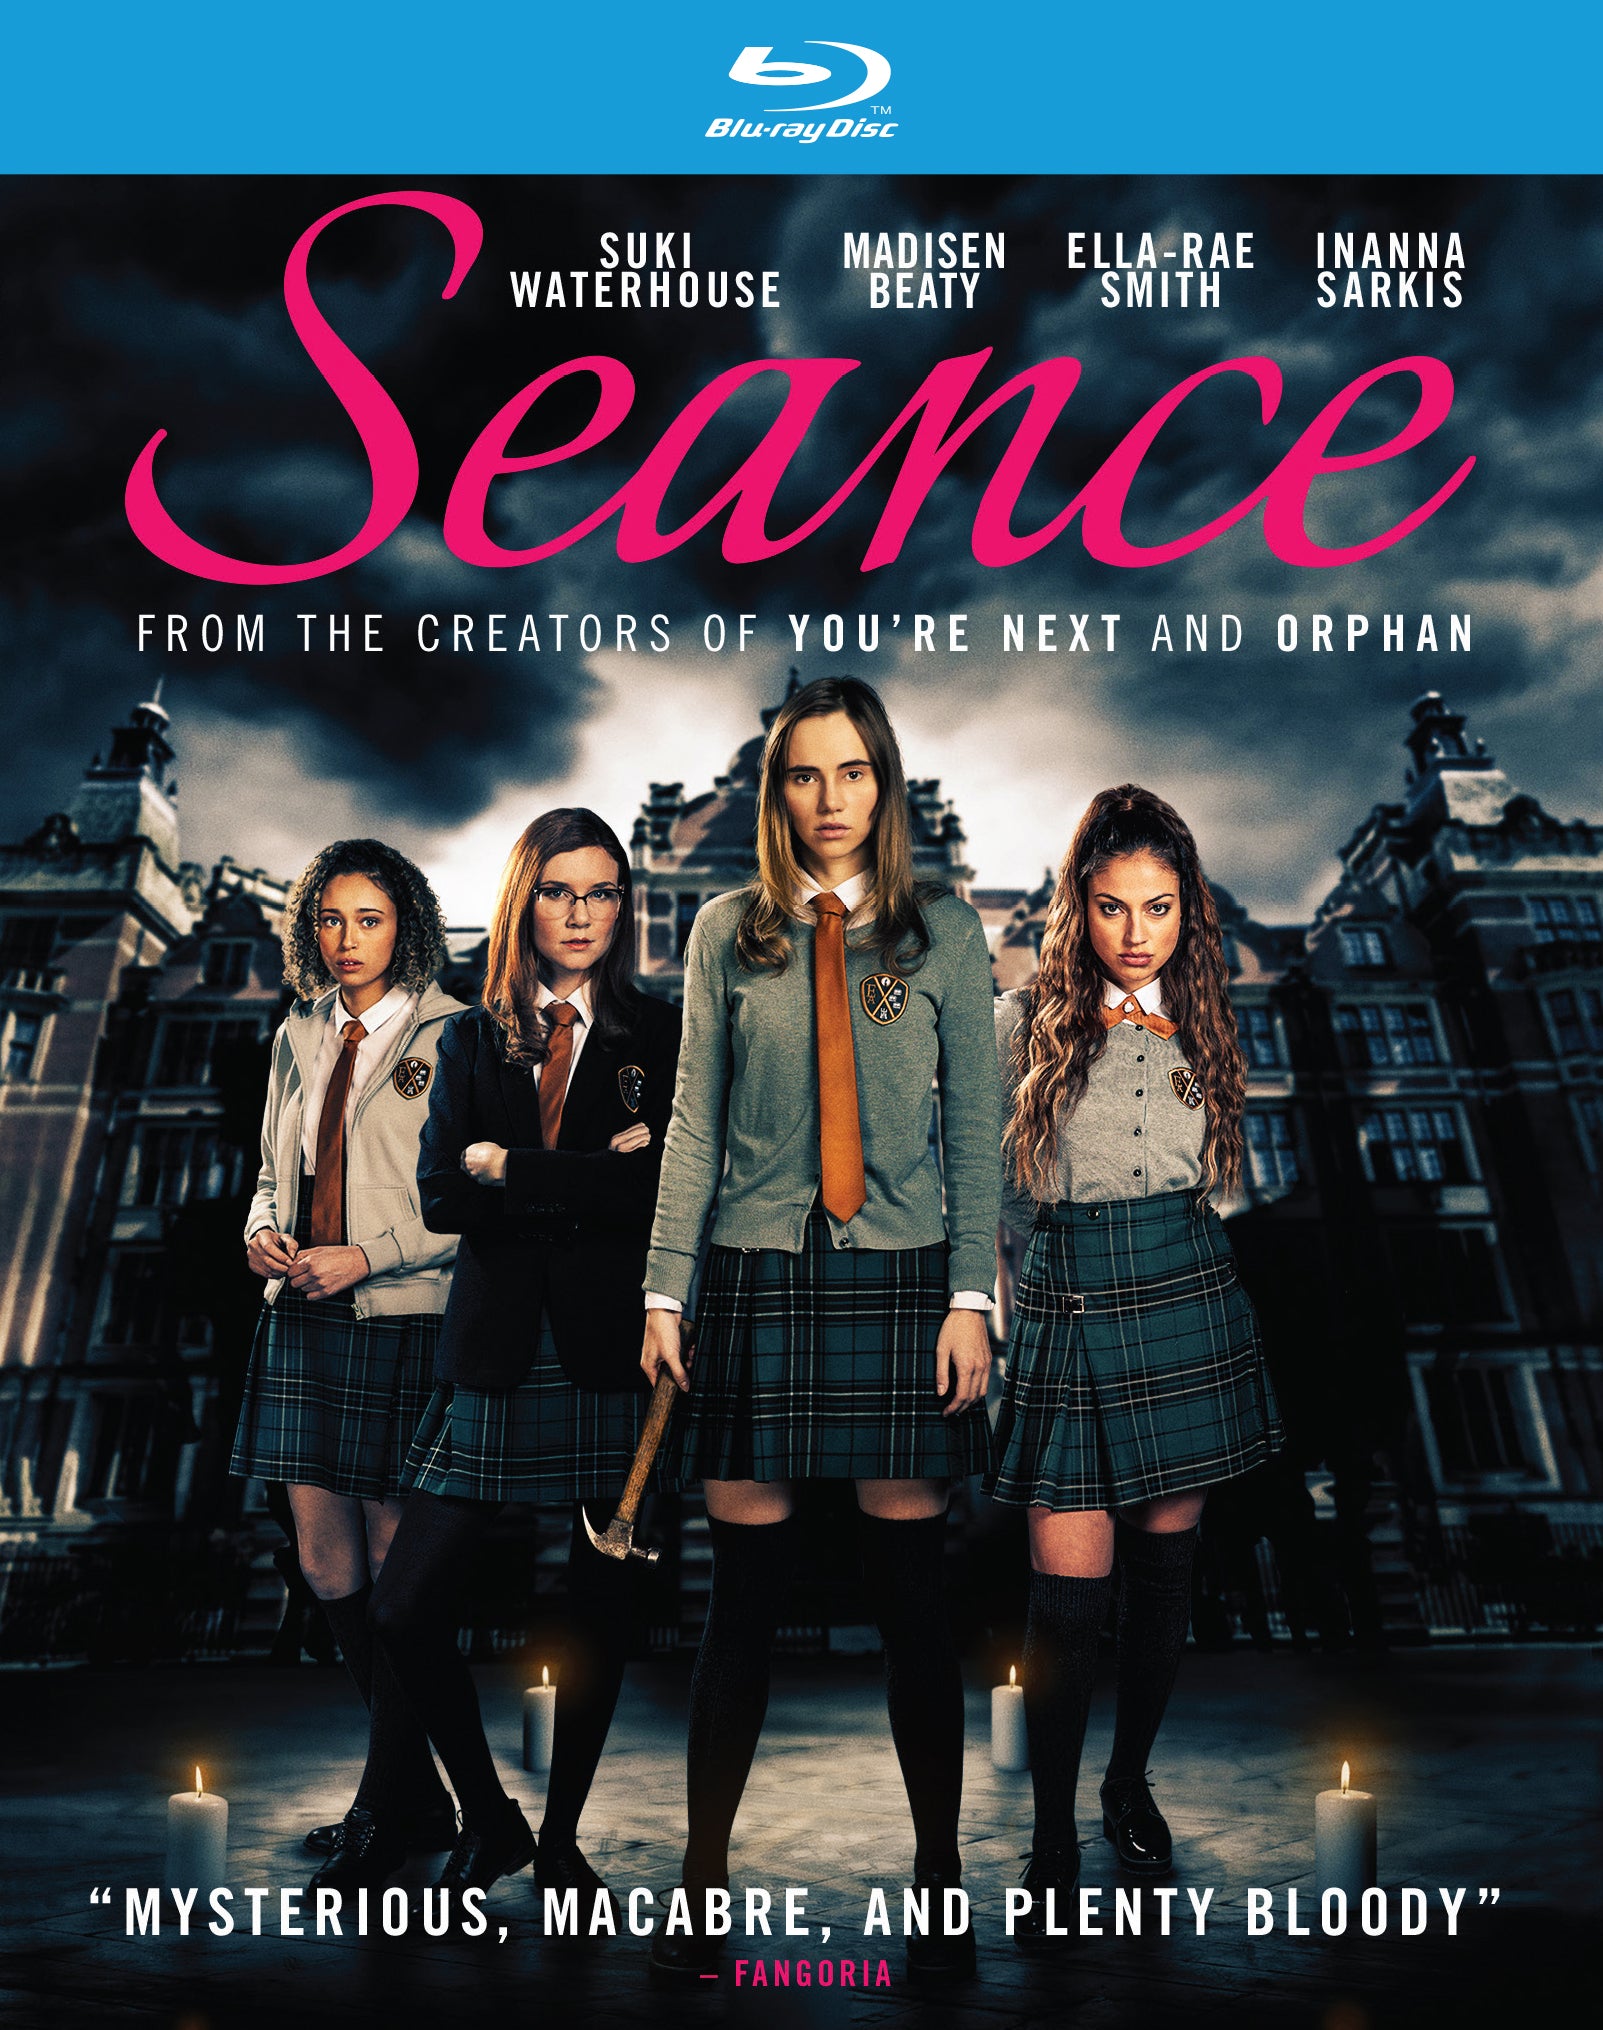 Seance [Blu-ray] cover art